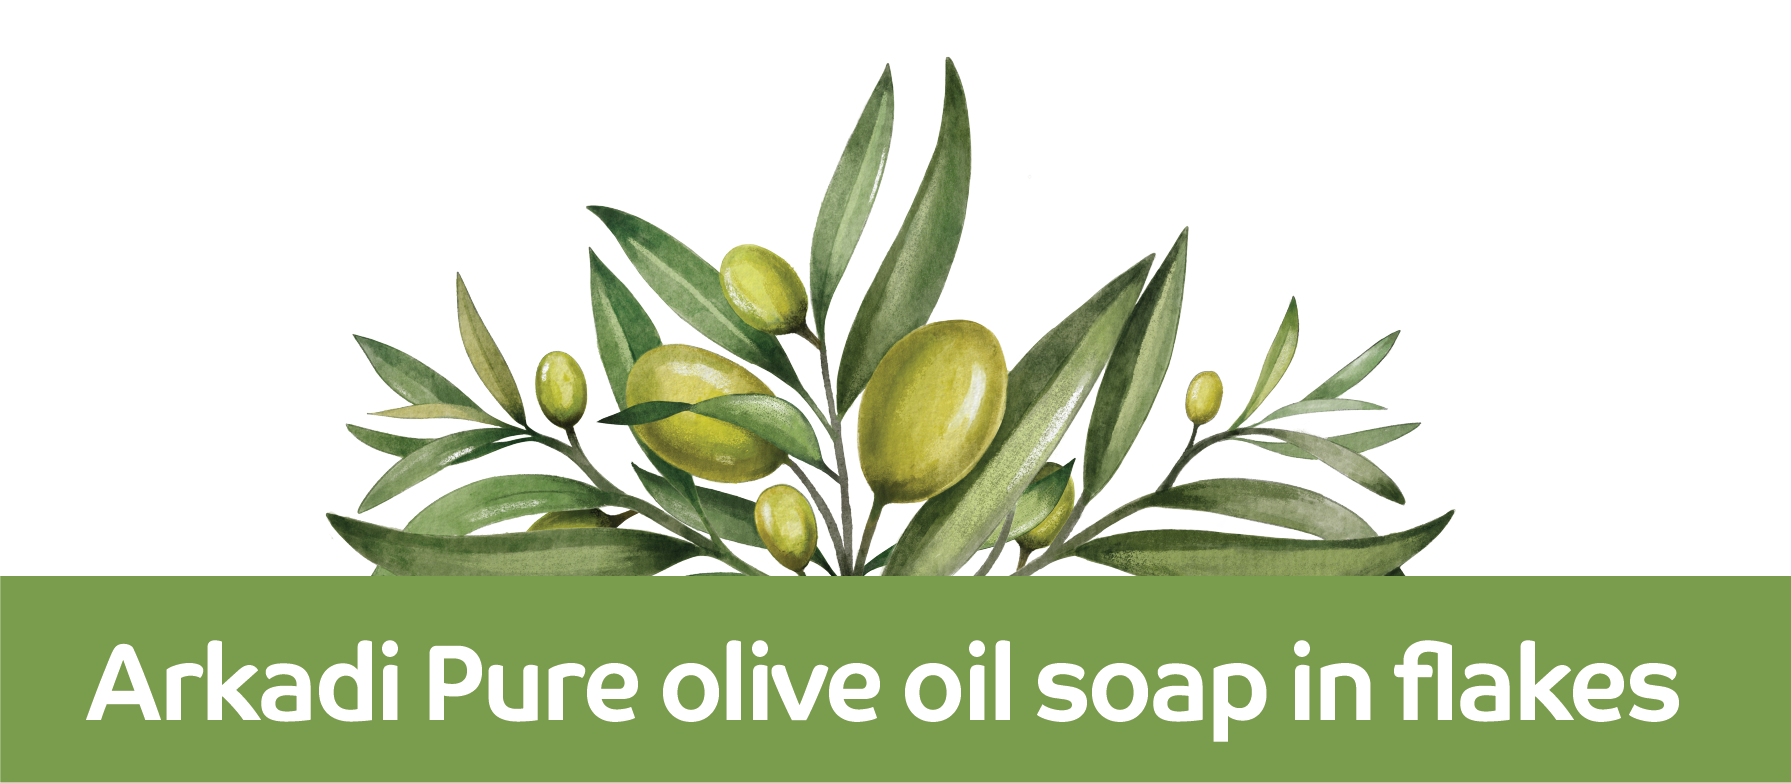 Arkadi Traditional Soap Flakes - Green Soap